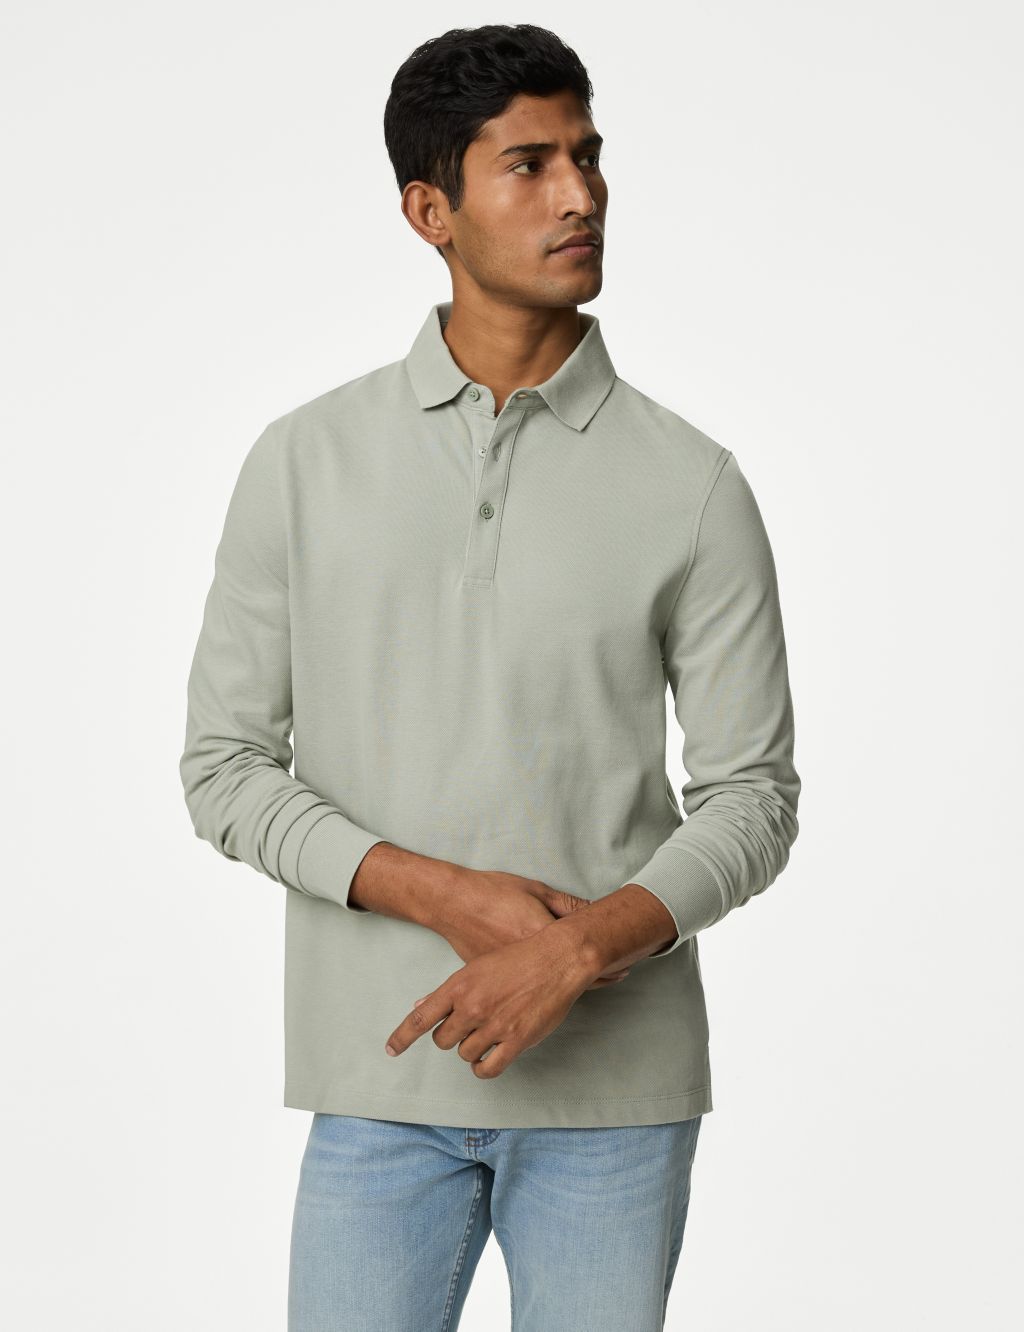 Men's Premium Double L® Polo, Long-Sleeve Without Pocket